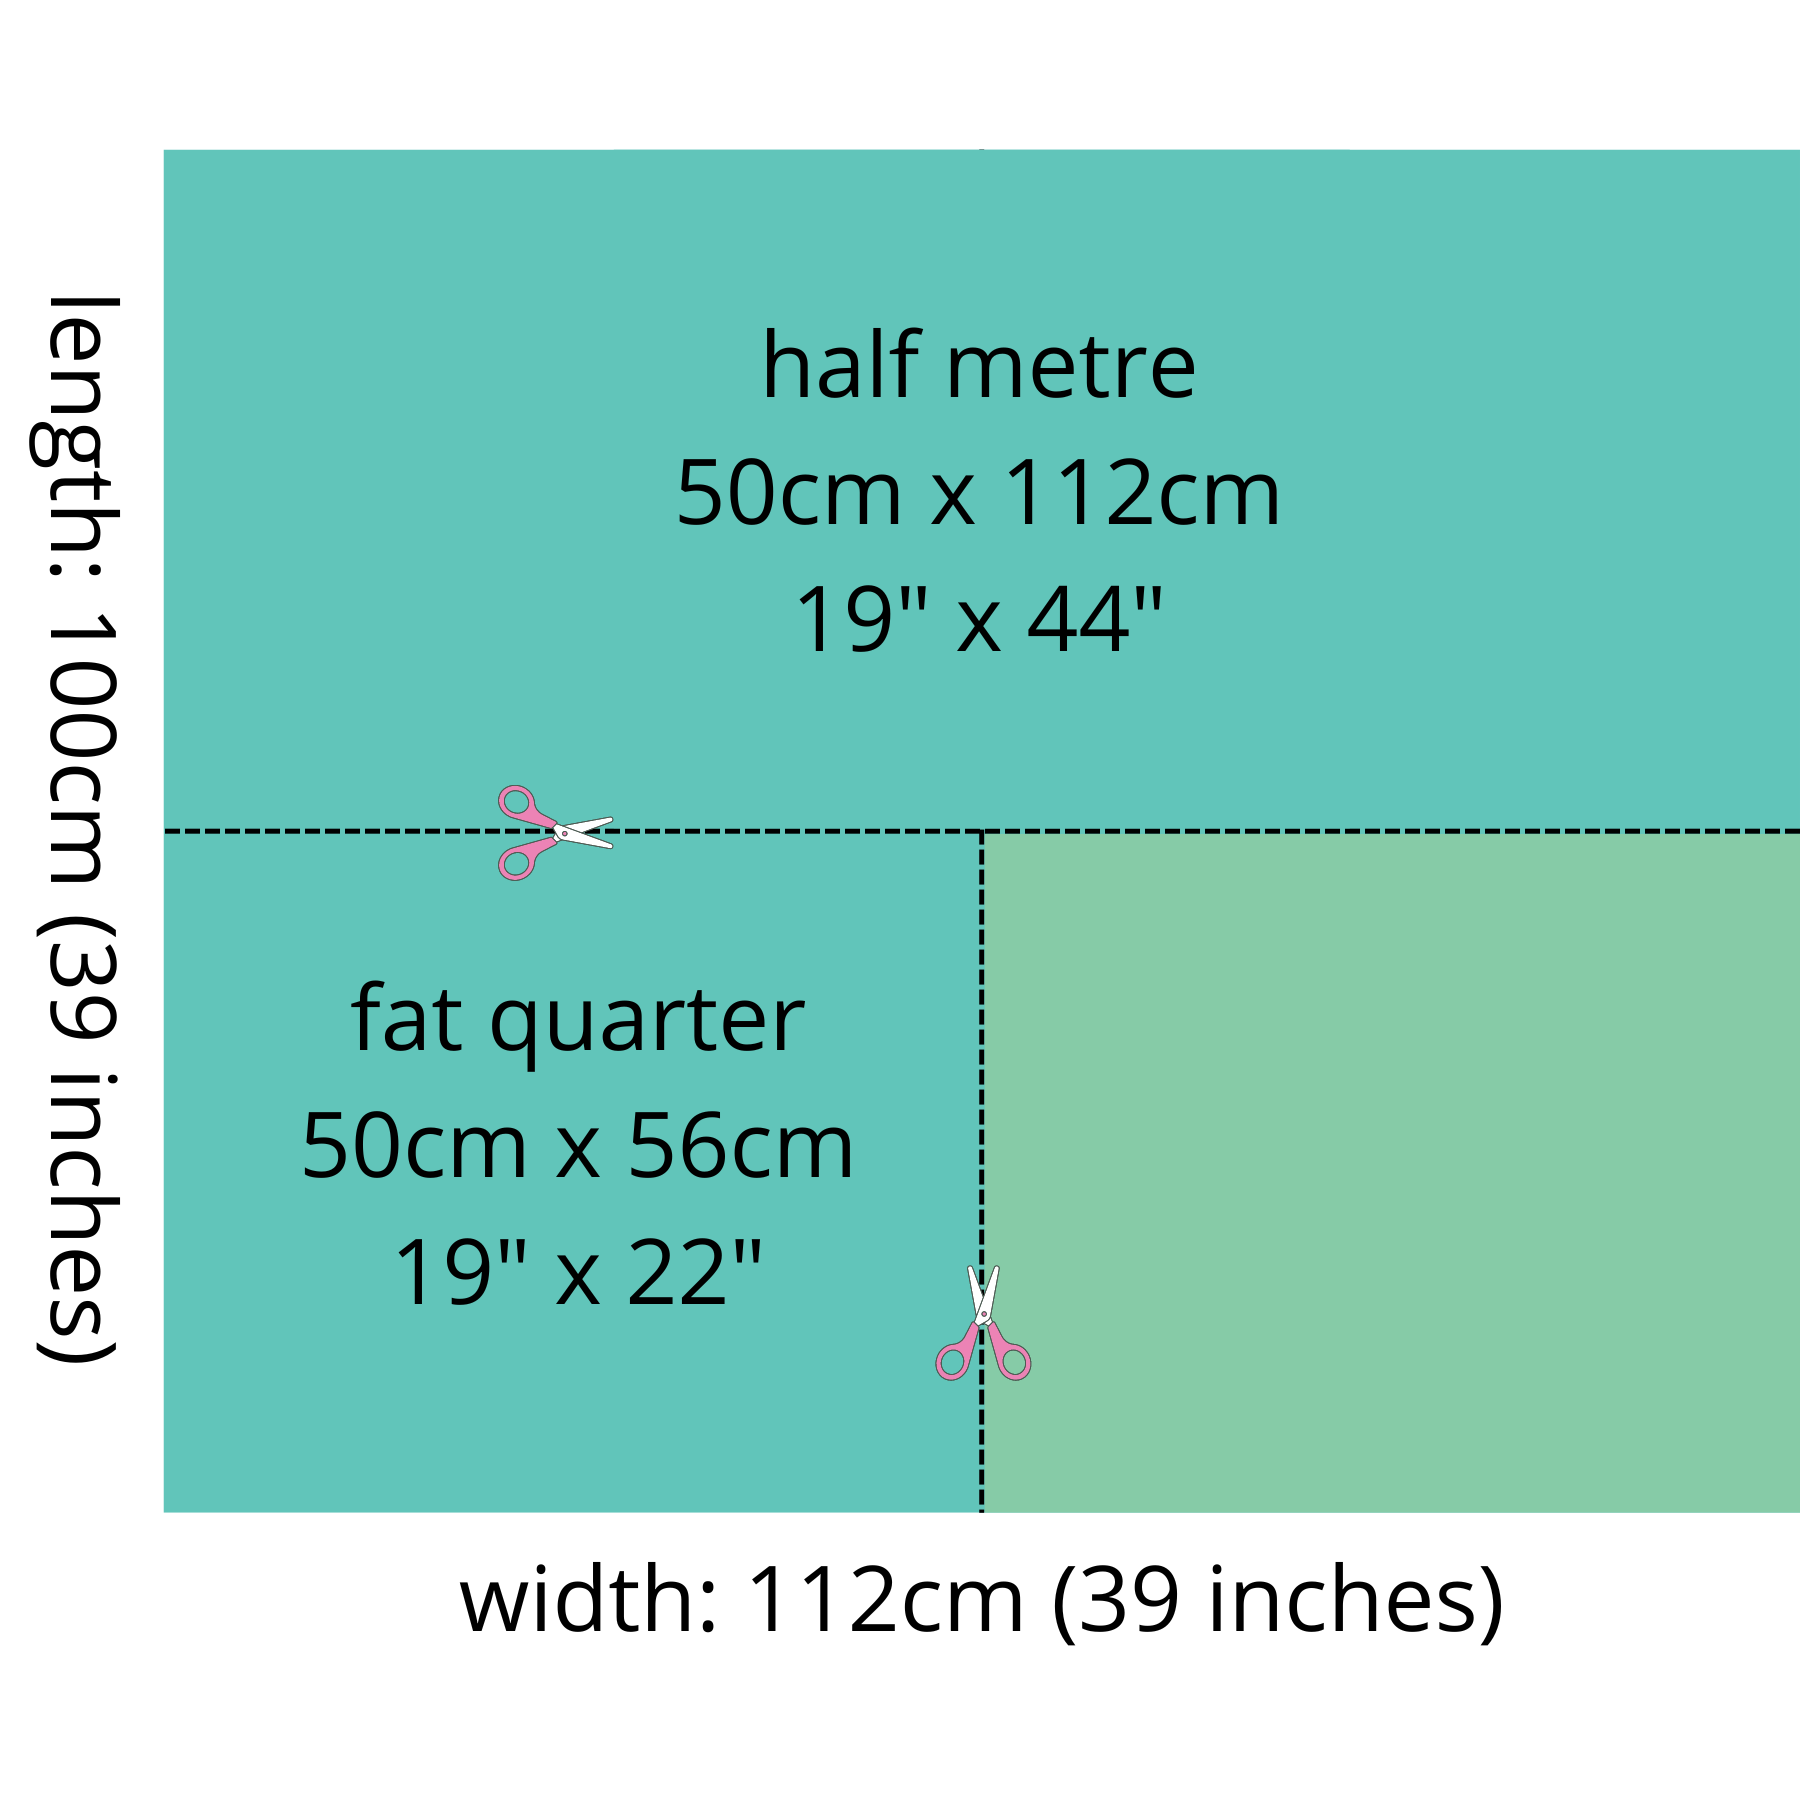 How to cut a fat quarter of quilting fabric diagram